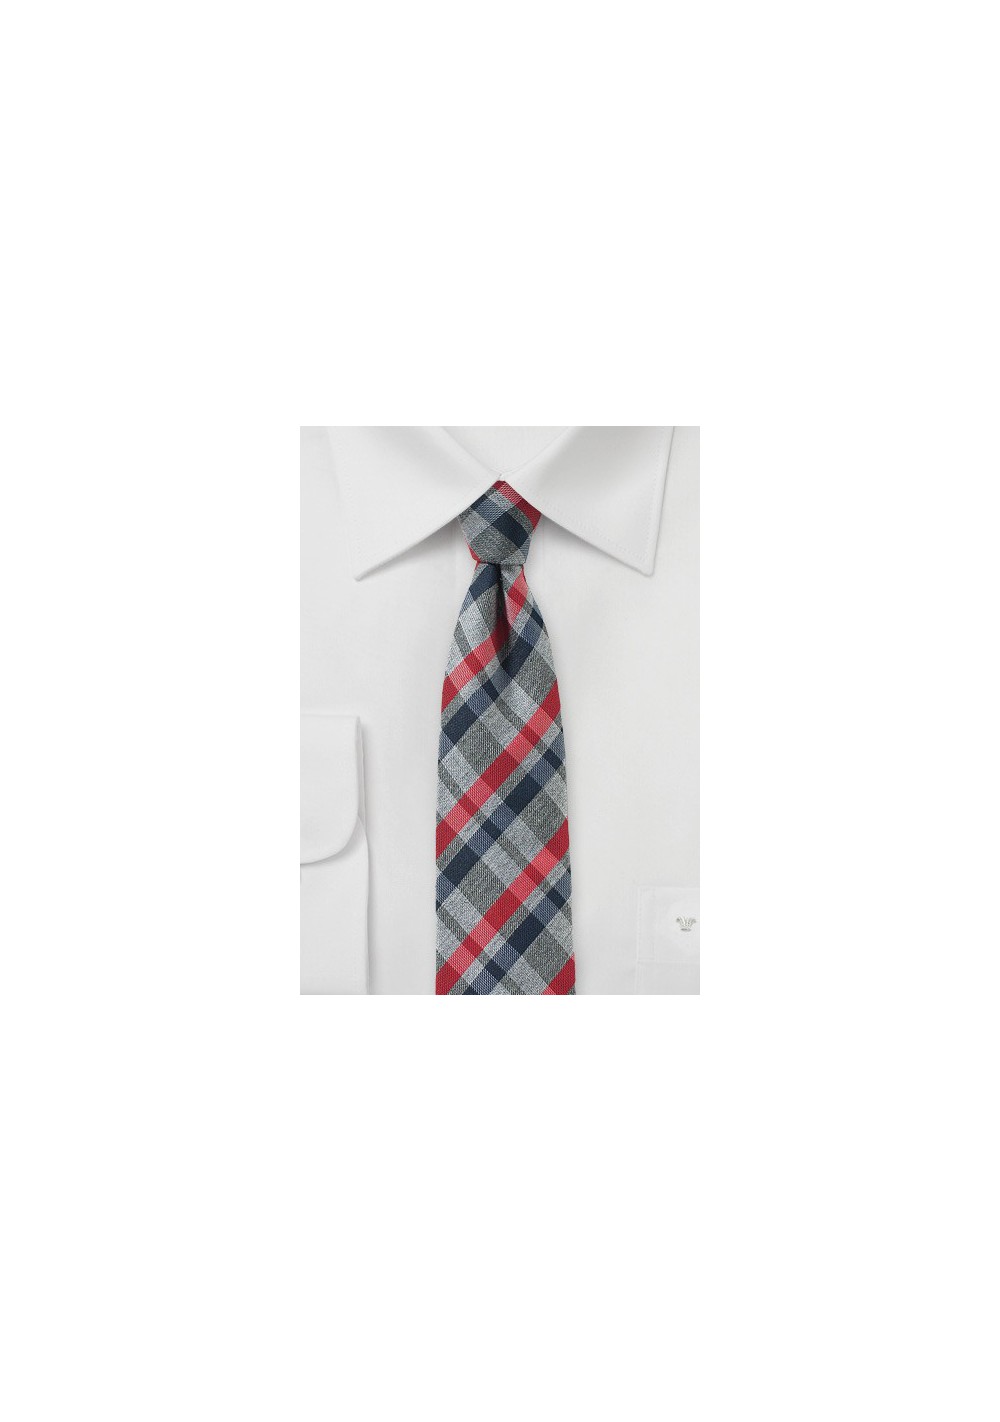 Trendy Tartan Plaid Tie in Grey, Navy, and Red